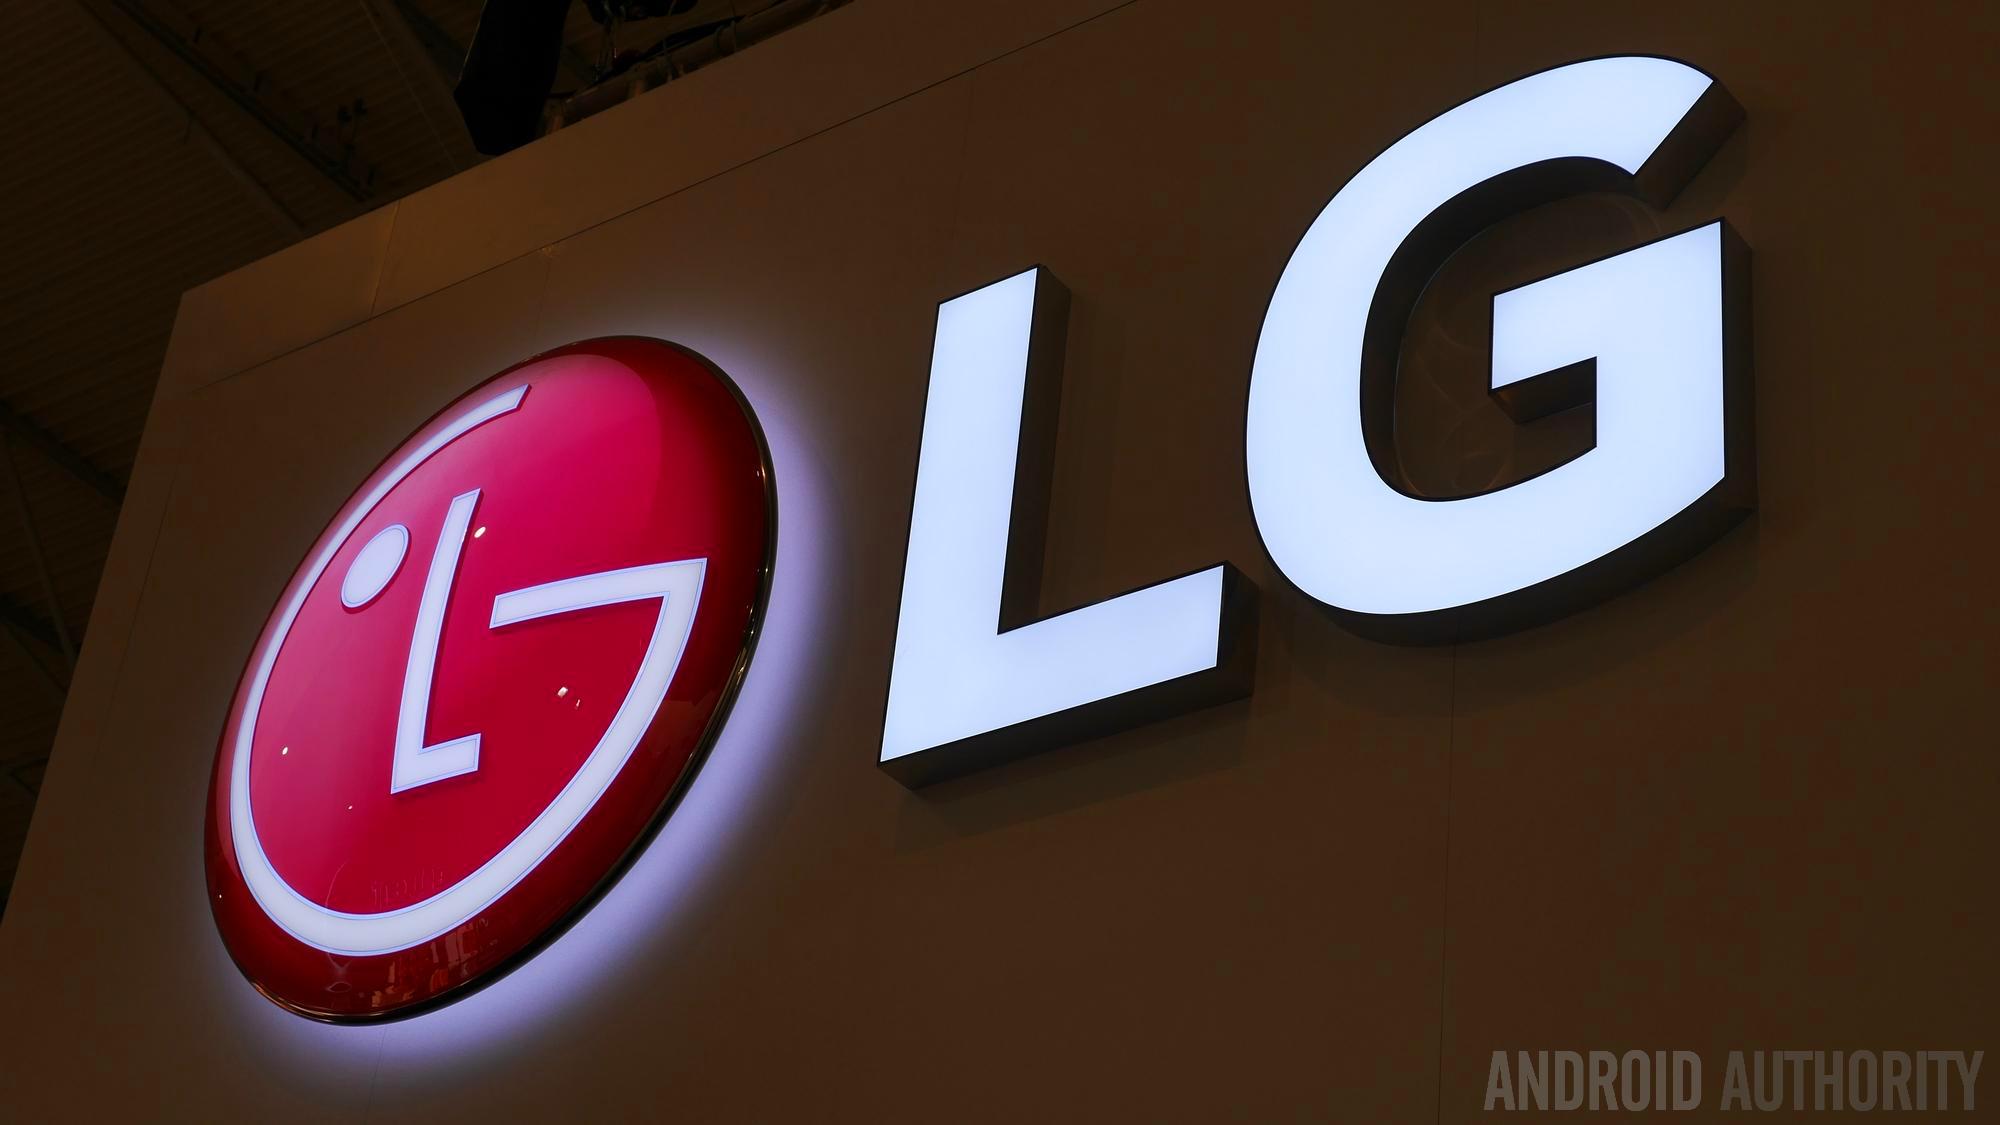 lg-logo-mwc-2015-s